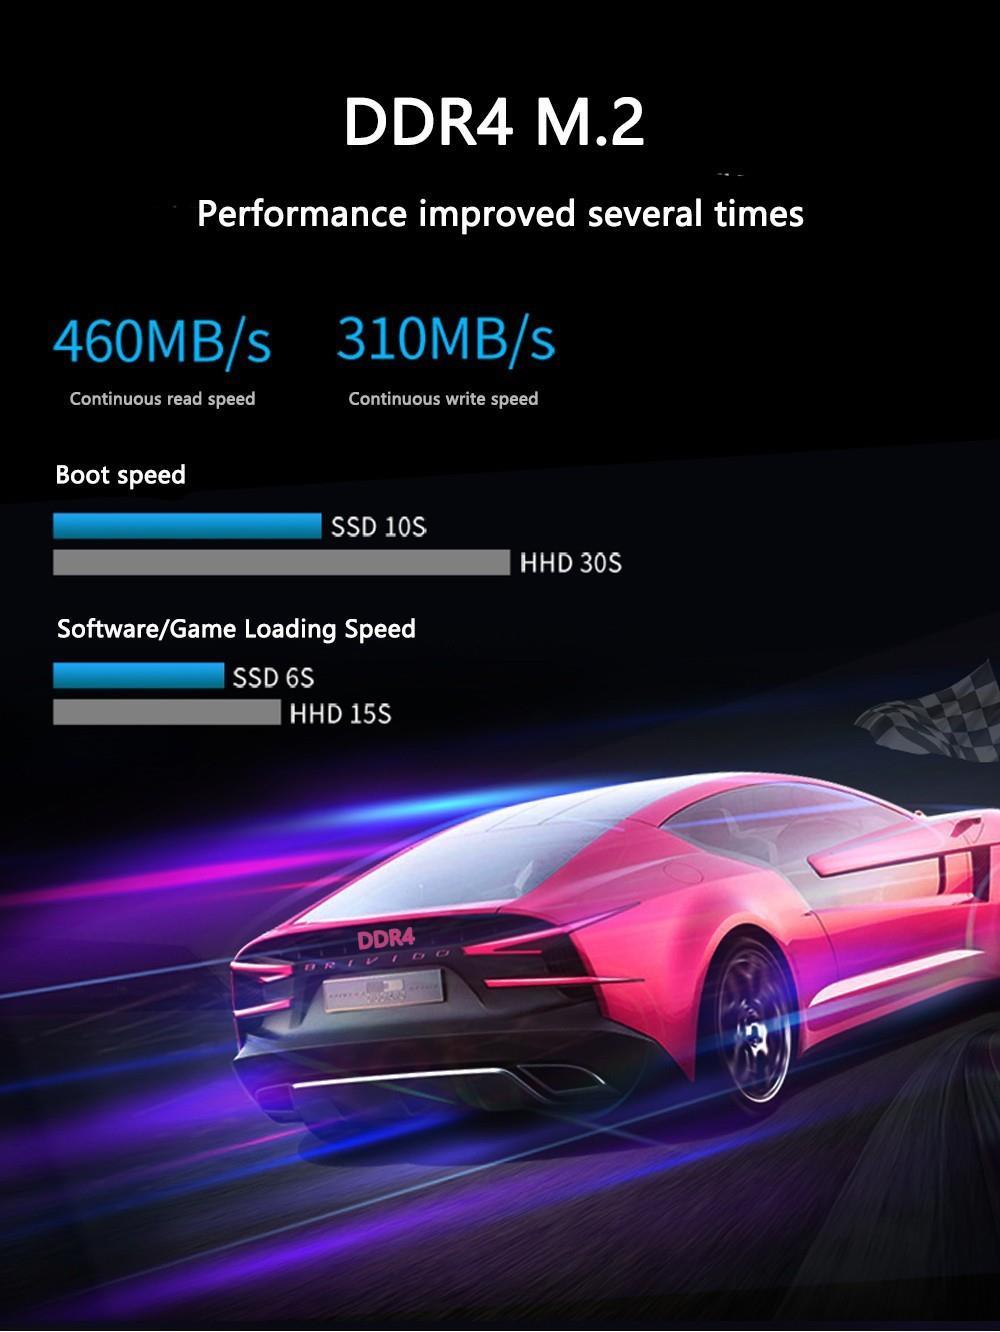 KUU Mingar 3 MINI PC AMD Ryzen 7 3750H Prozessor bis zu 4.0 GHz, 16GB DDR4 512GB SSD, Windows 10, BT5.0, 2.4/5G WiFi